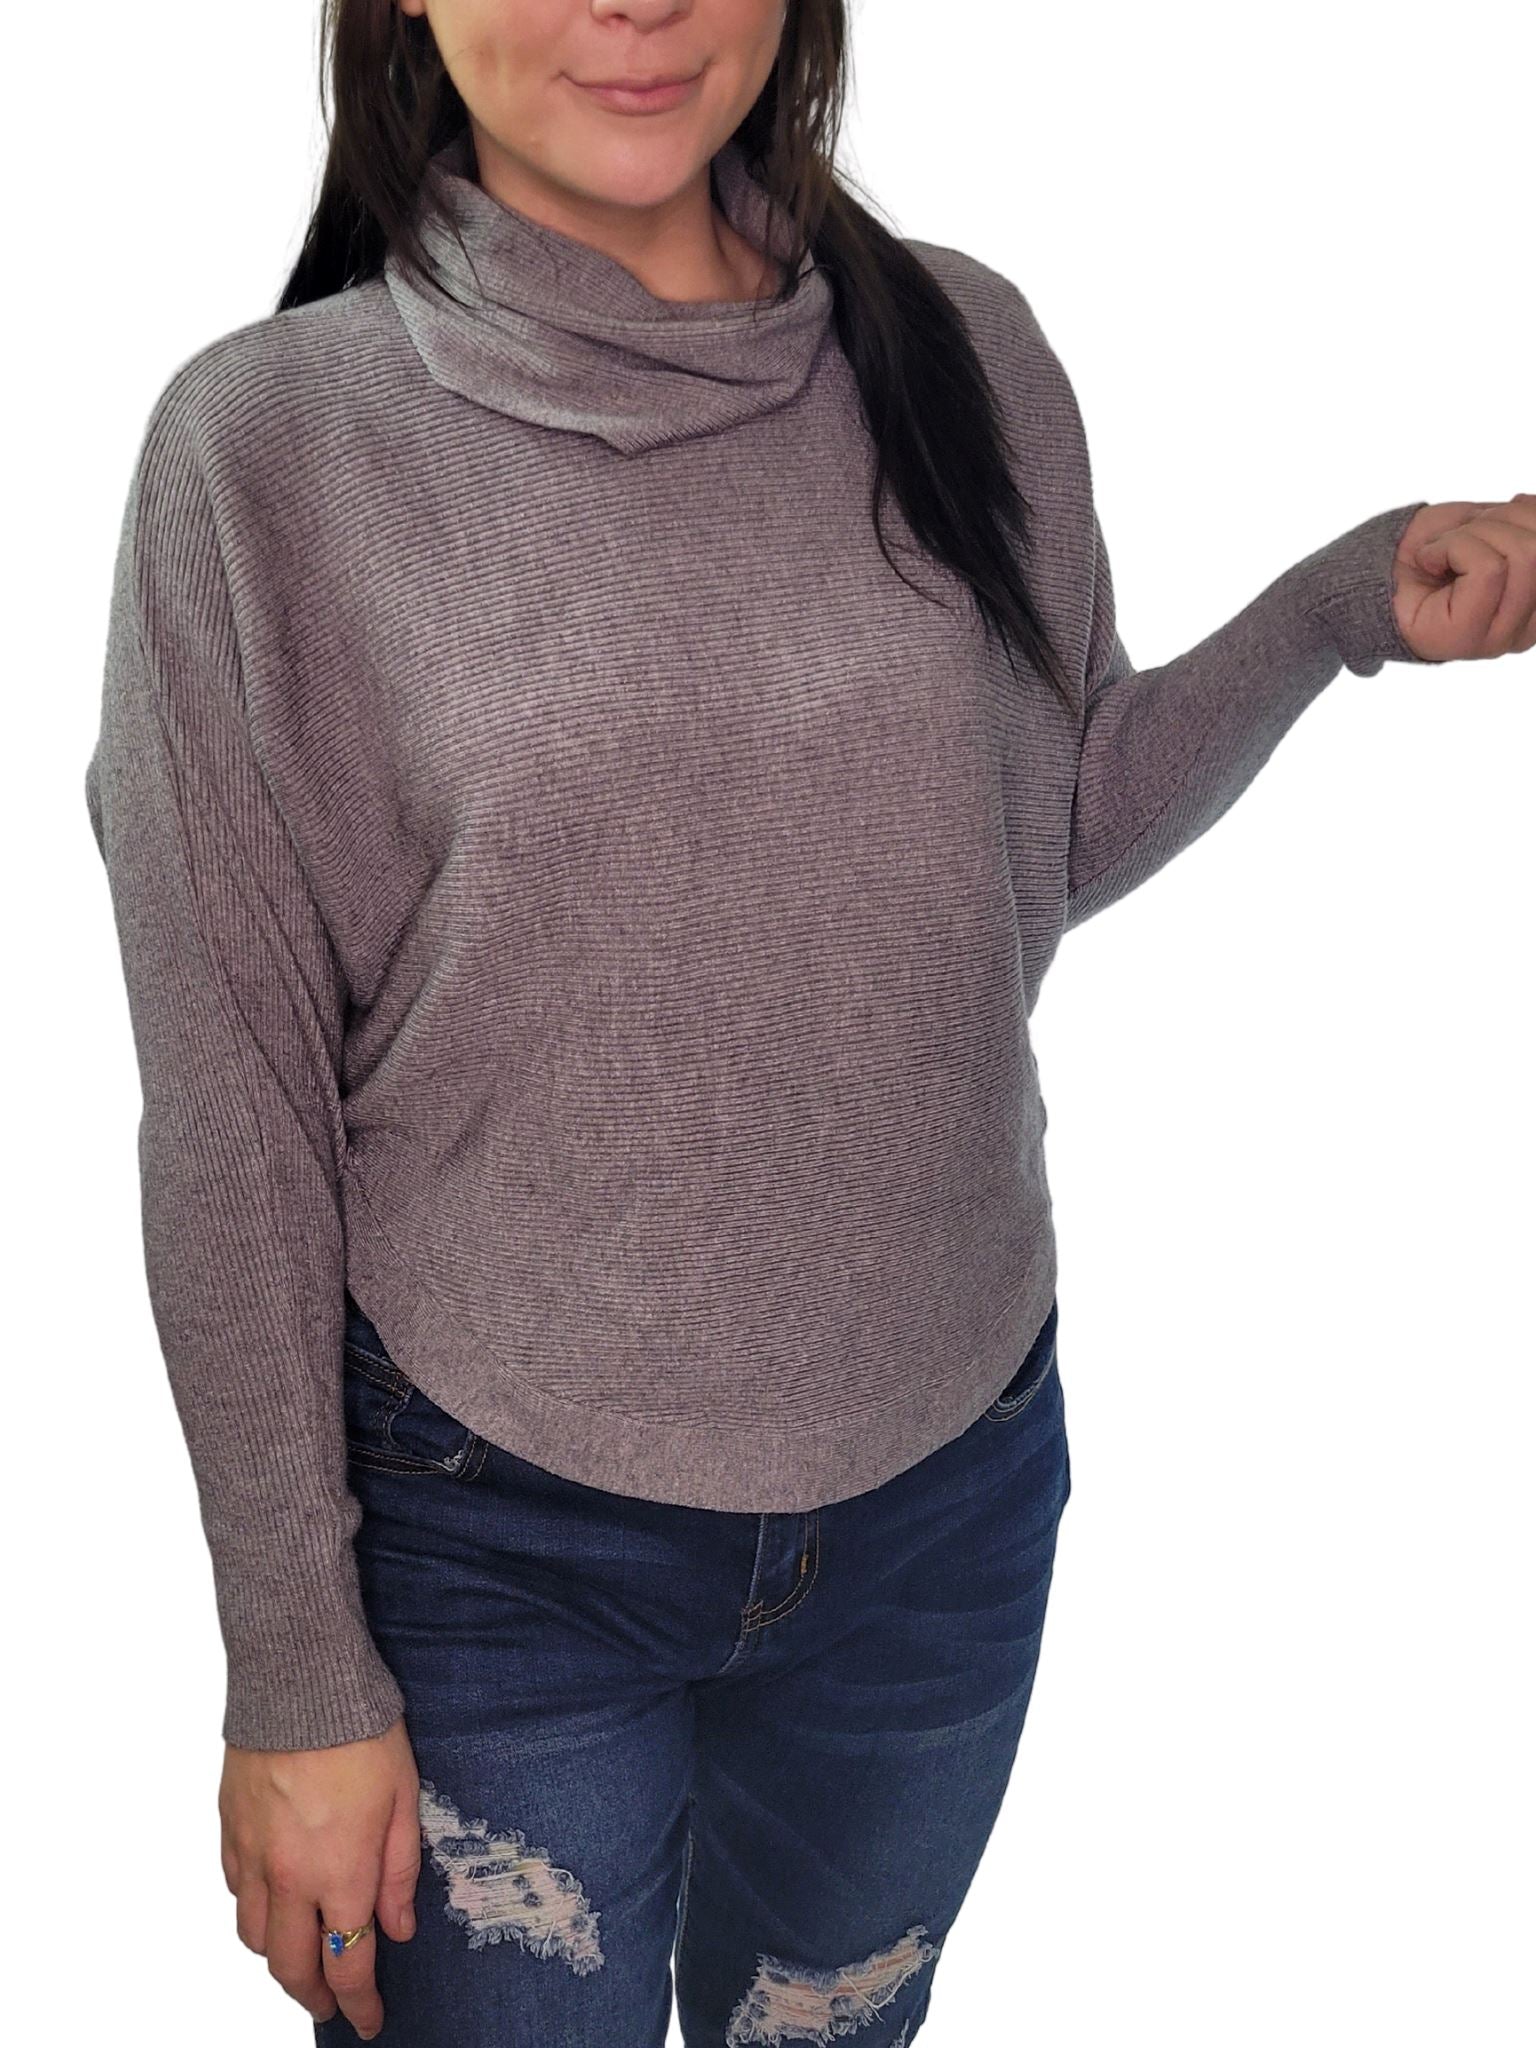 ROBBI Loose Sweater Tops - 2 colors Sweater Aambers Goodies xx 6-10 au (XS-M) GREY 